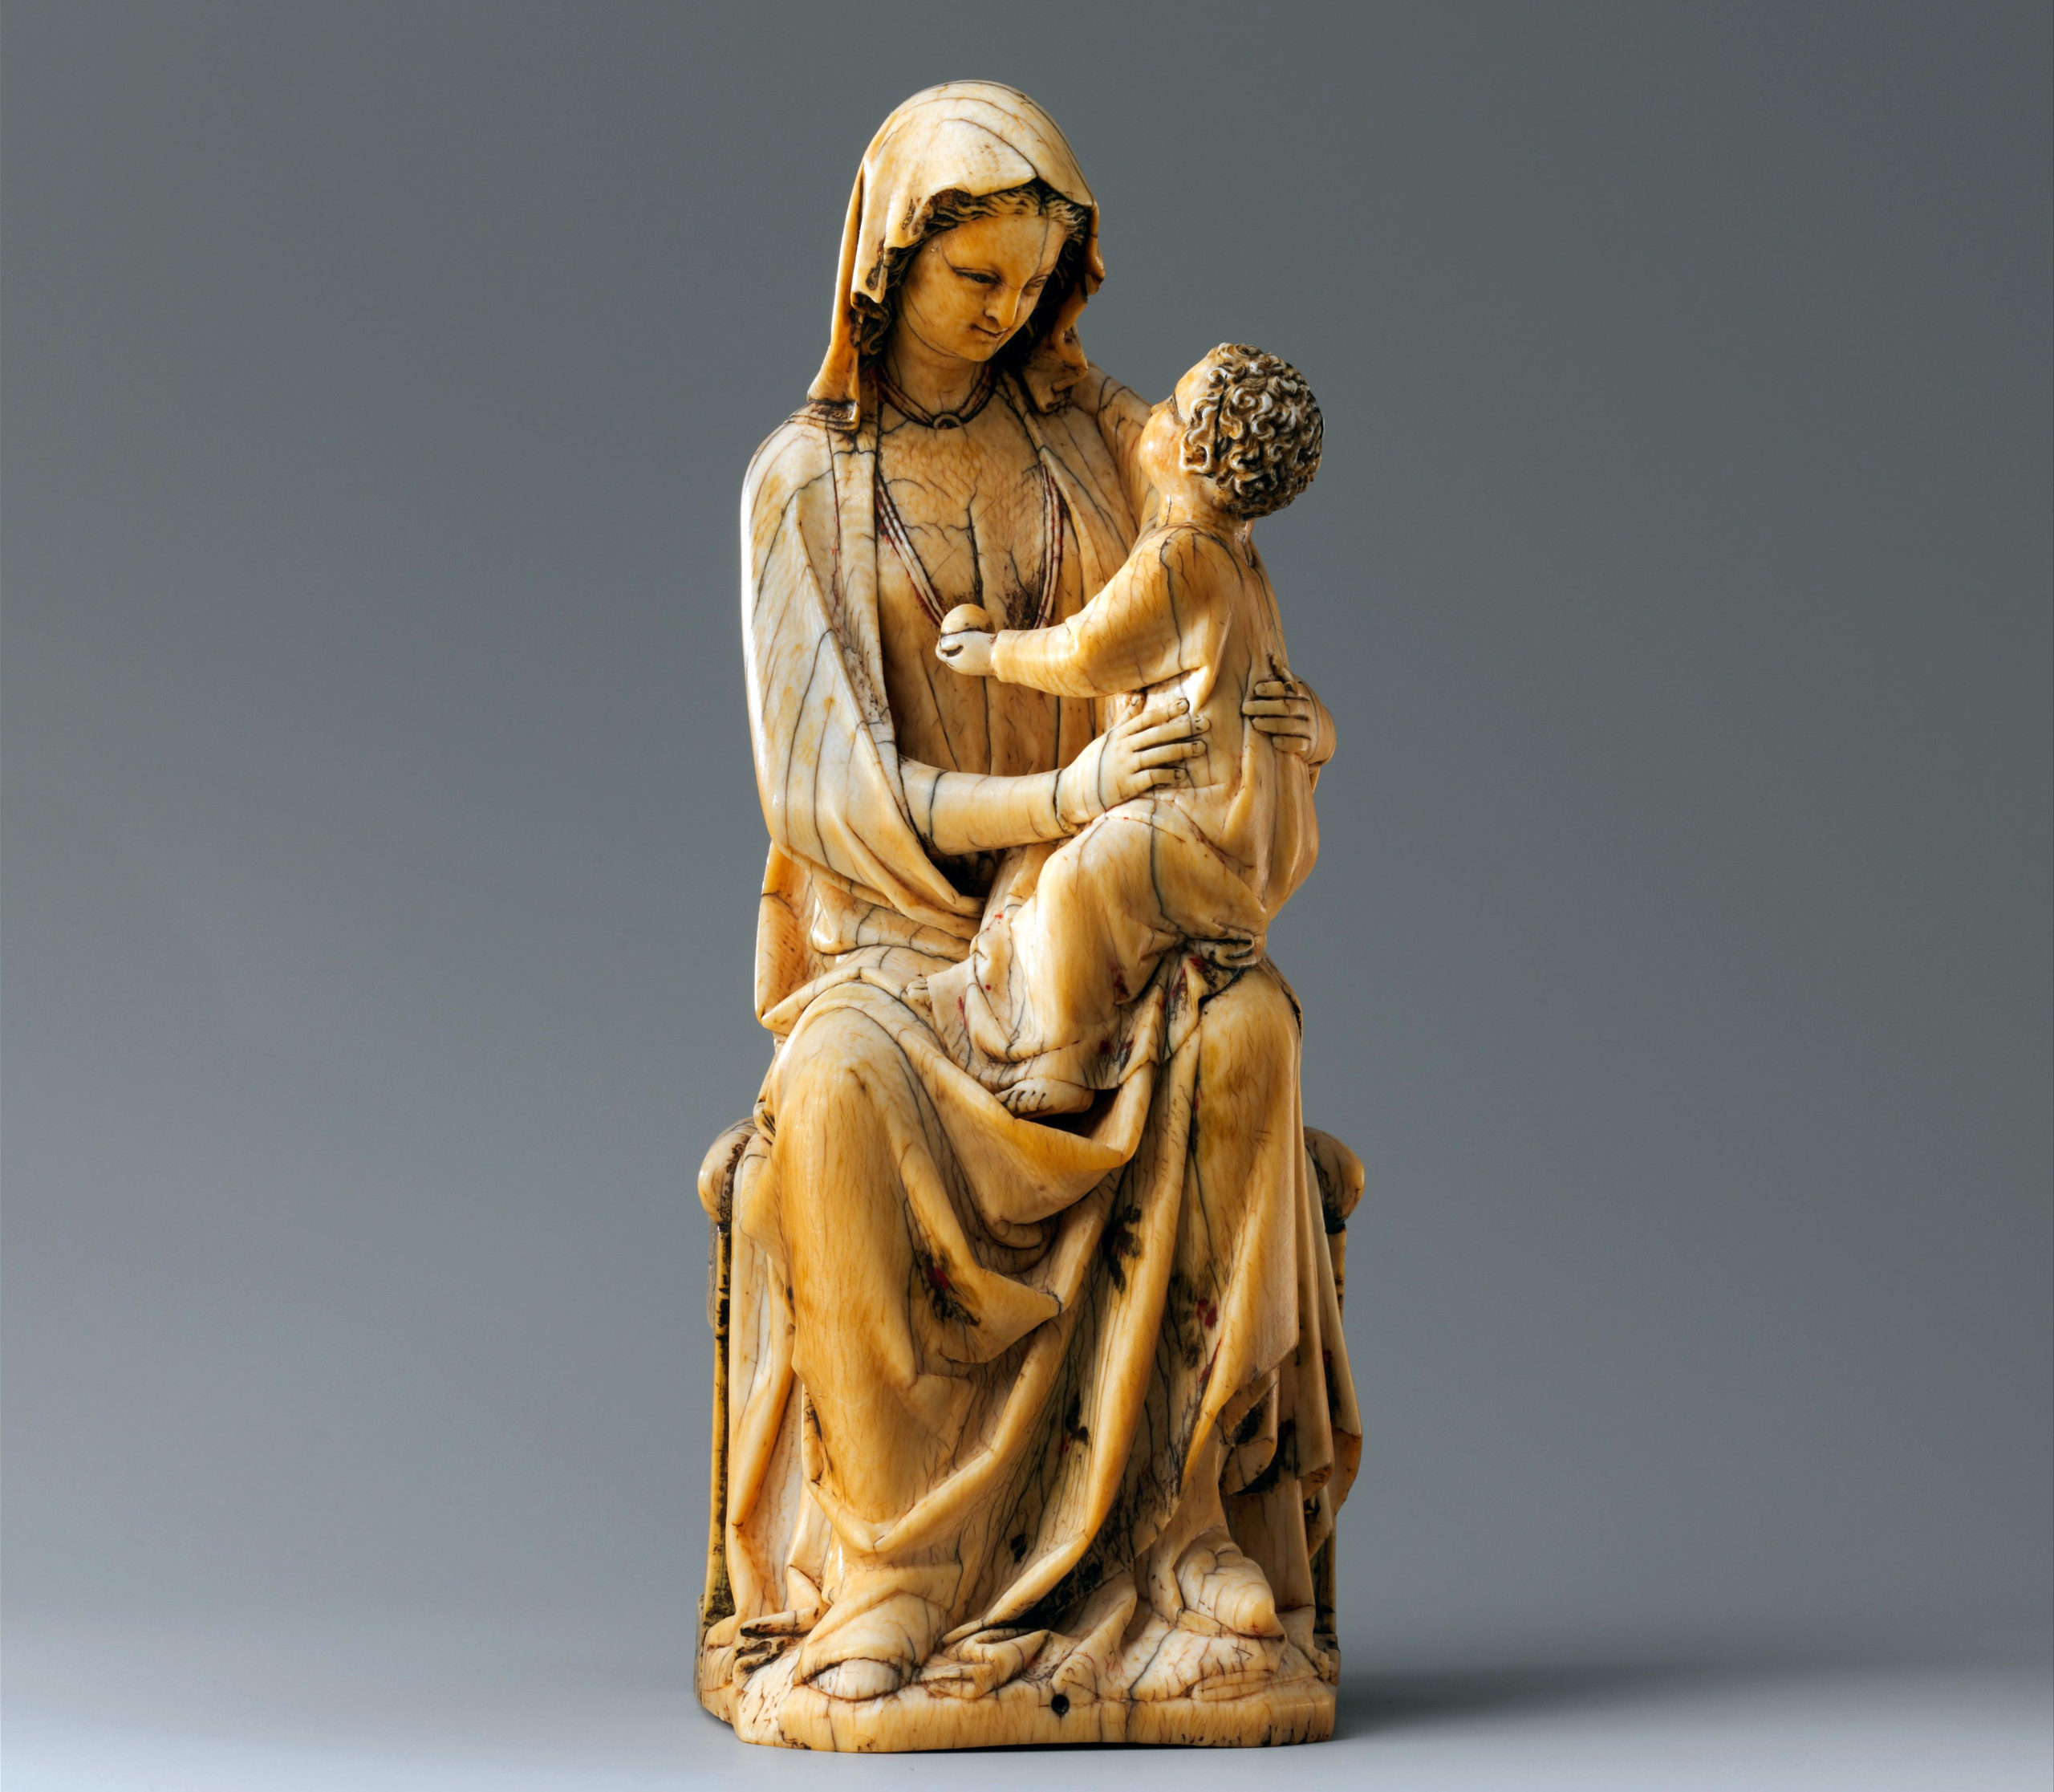 Enthroned Virgin and Child, ca. 1260-80, Paris, France, 18.4 x 7.6 x 7.3 cm (Metropolitan Museum of Art)